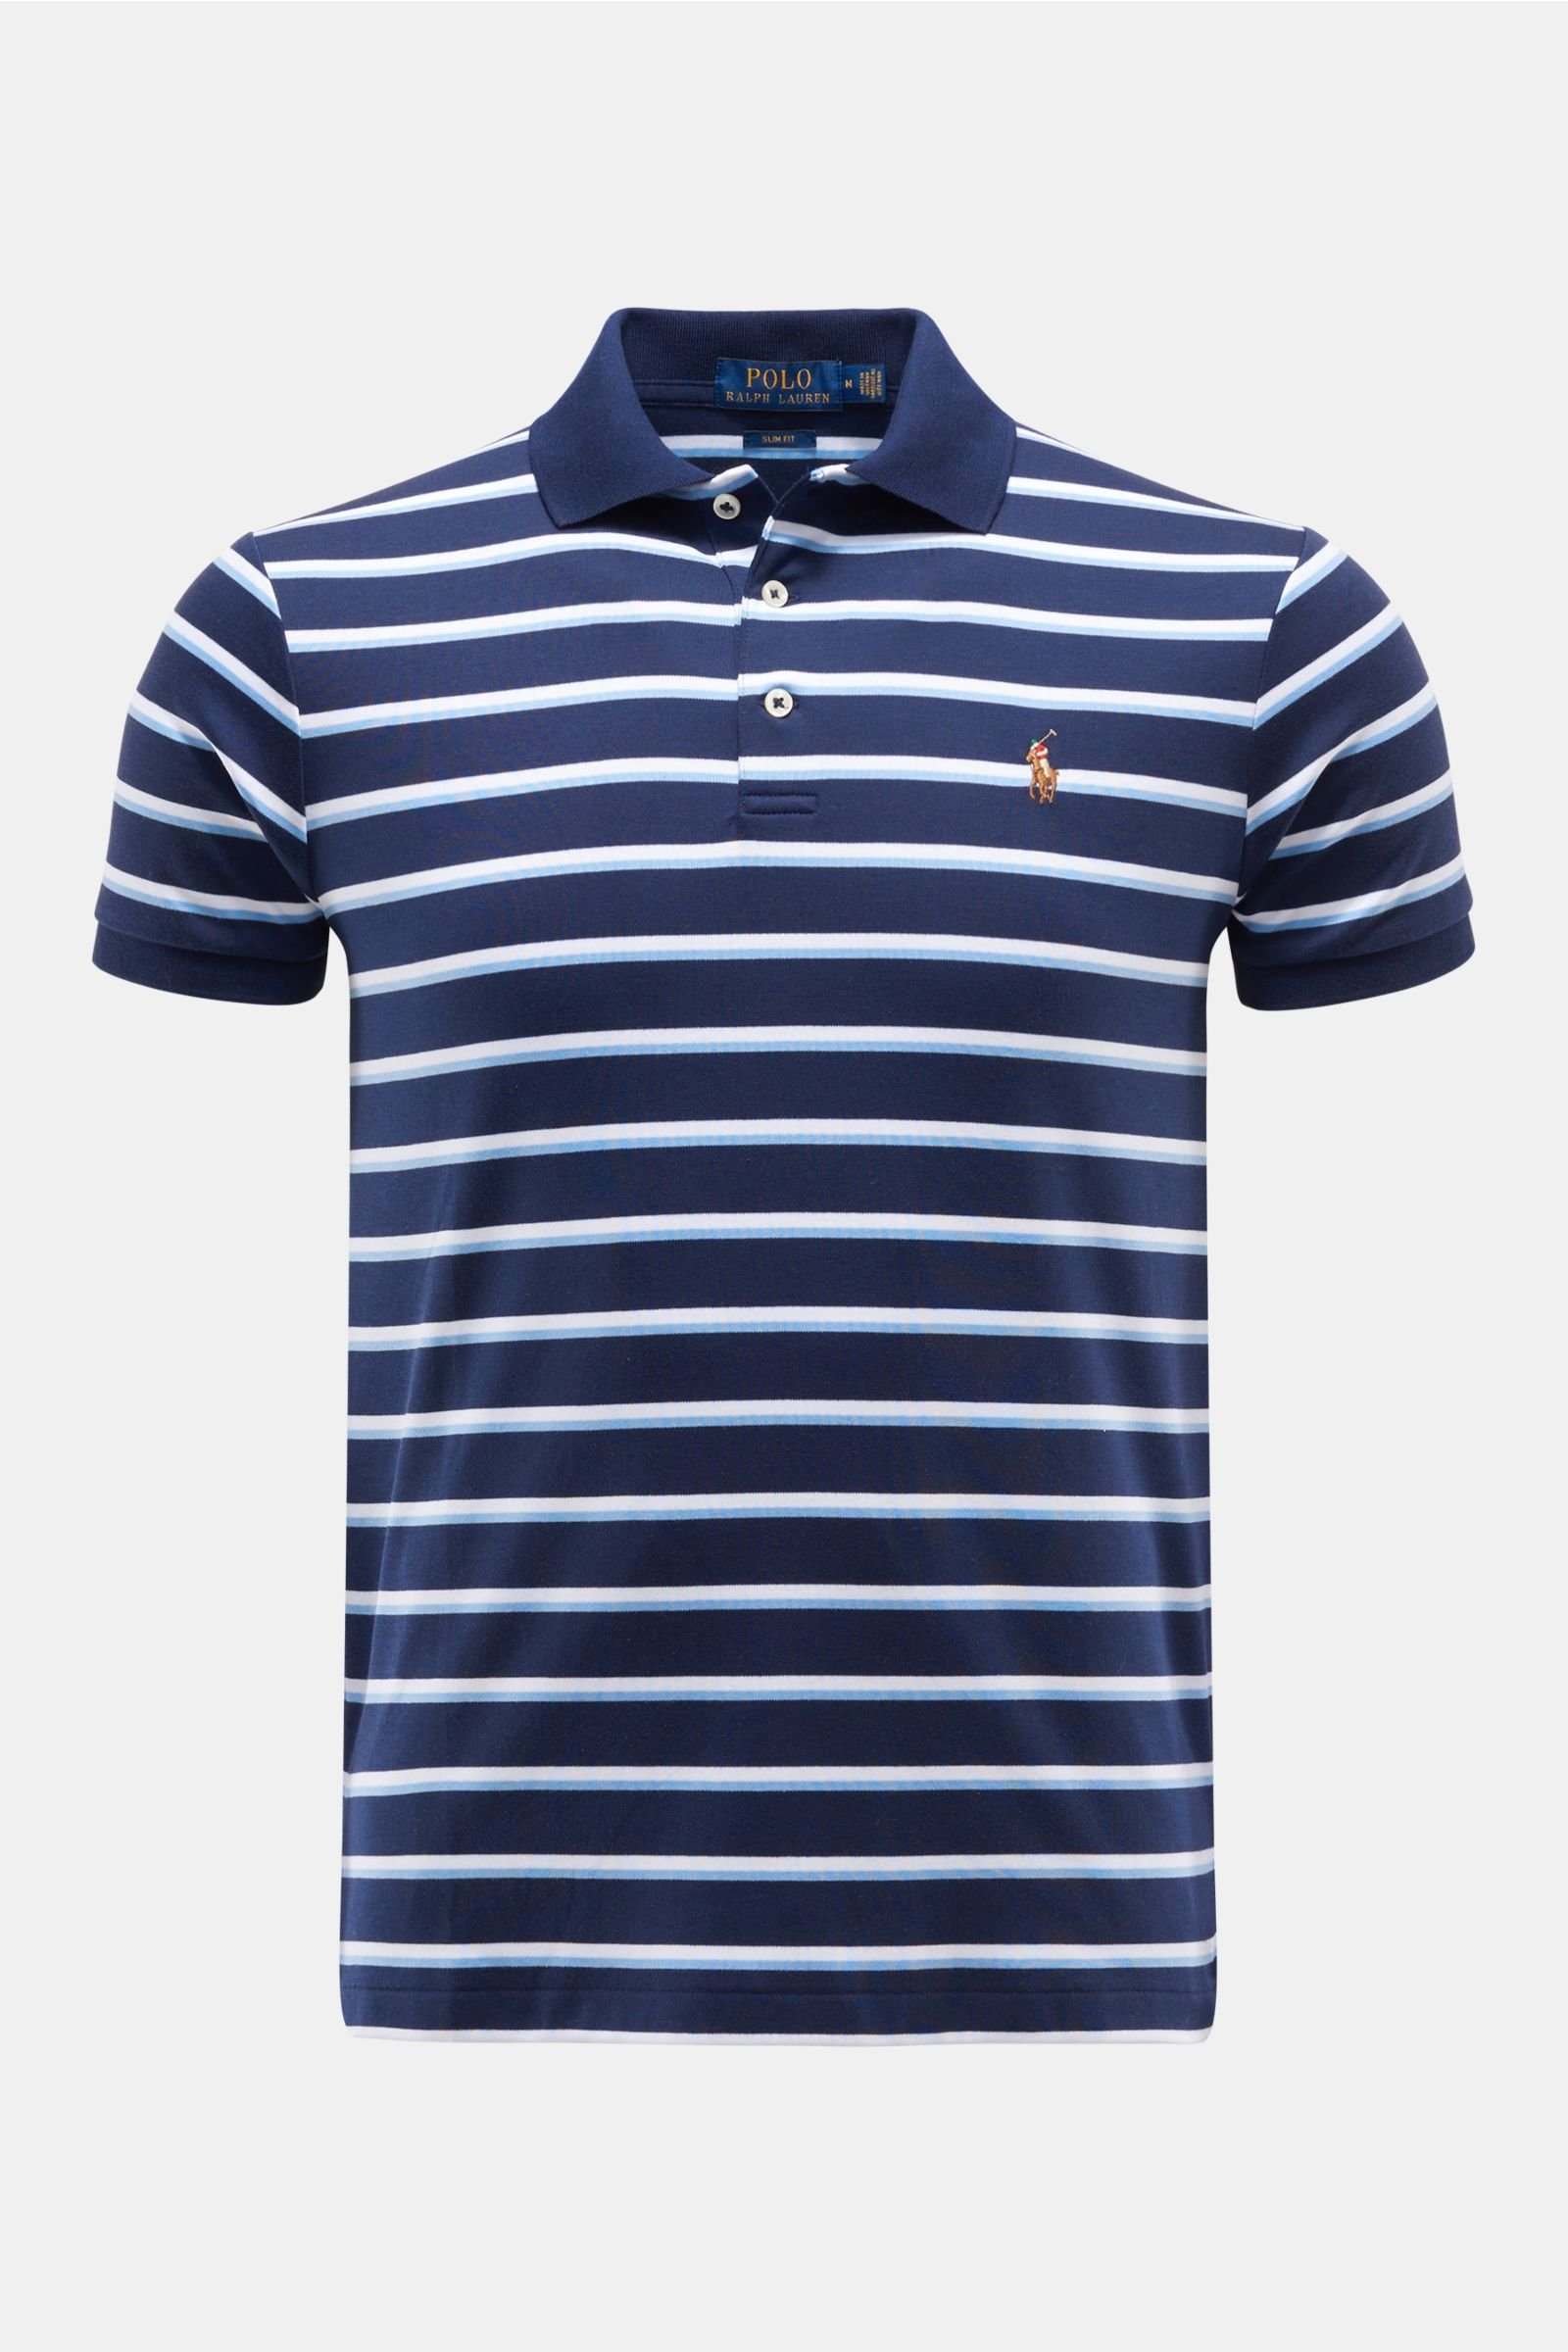 Jersey polo shirt navy/white striped